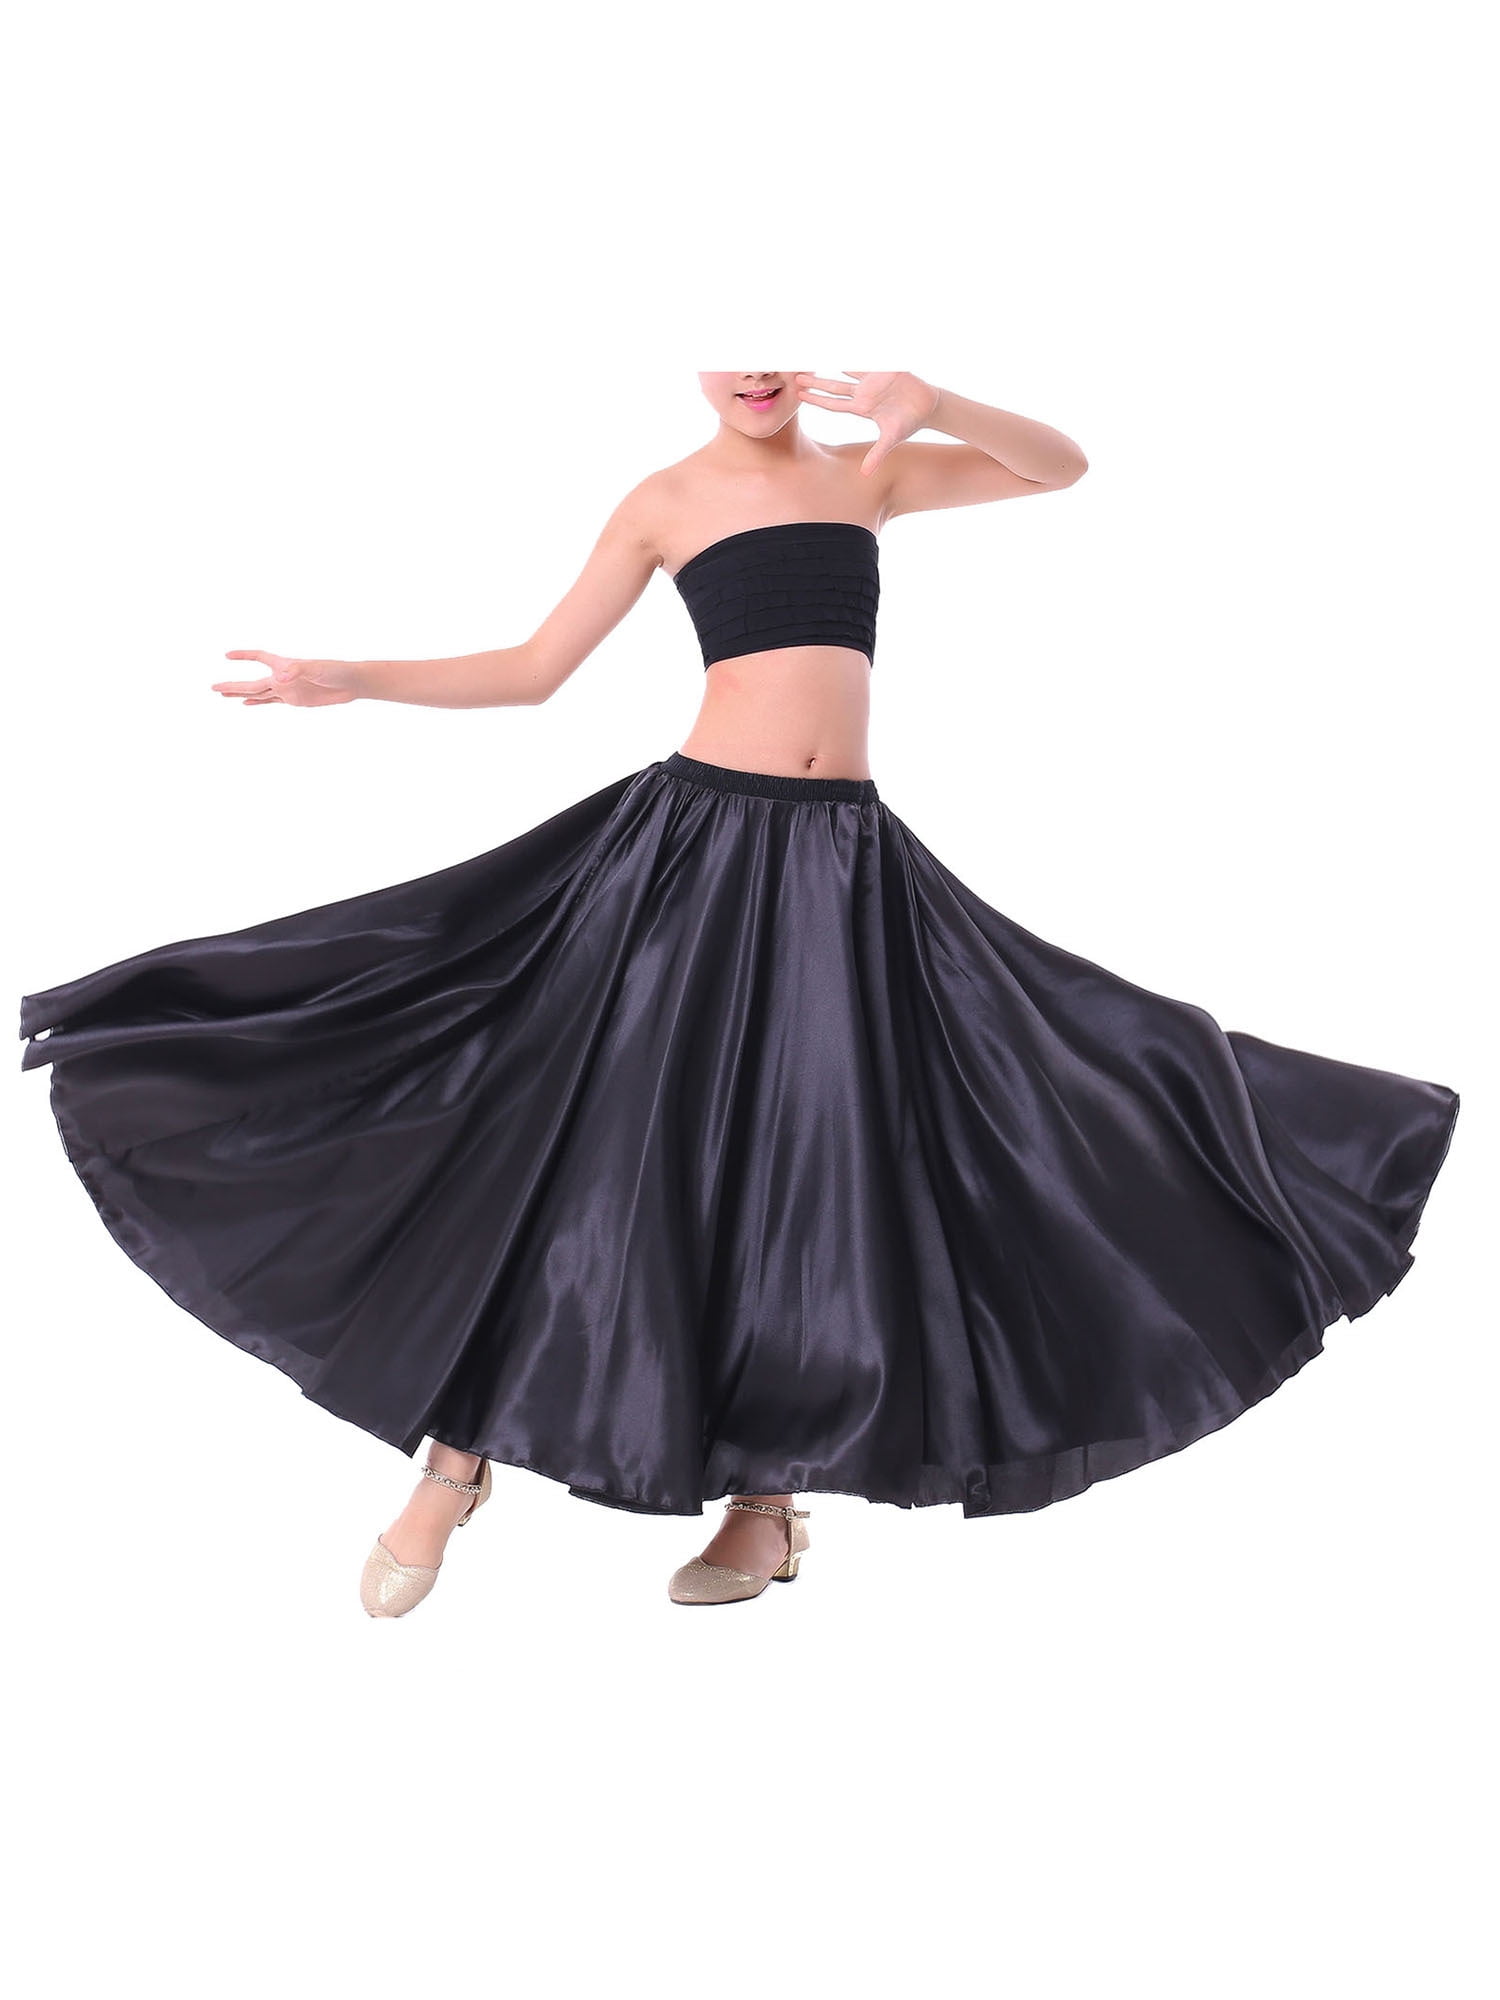 Flamenco skirt size L in green watter - El Rocio